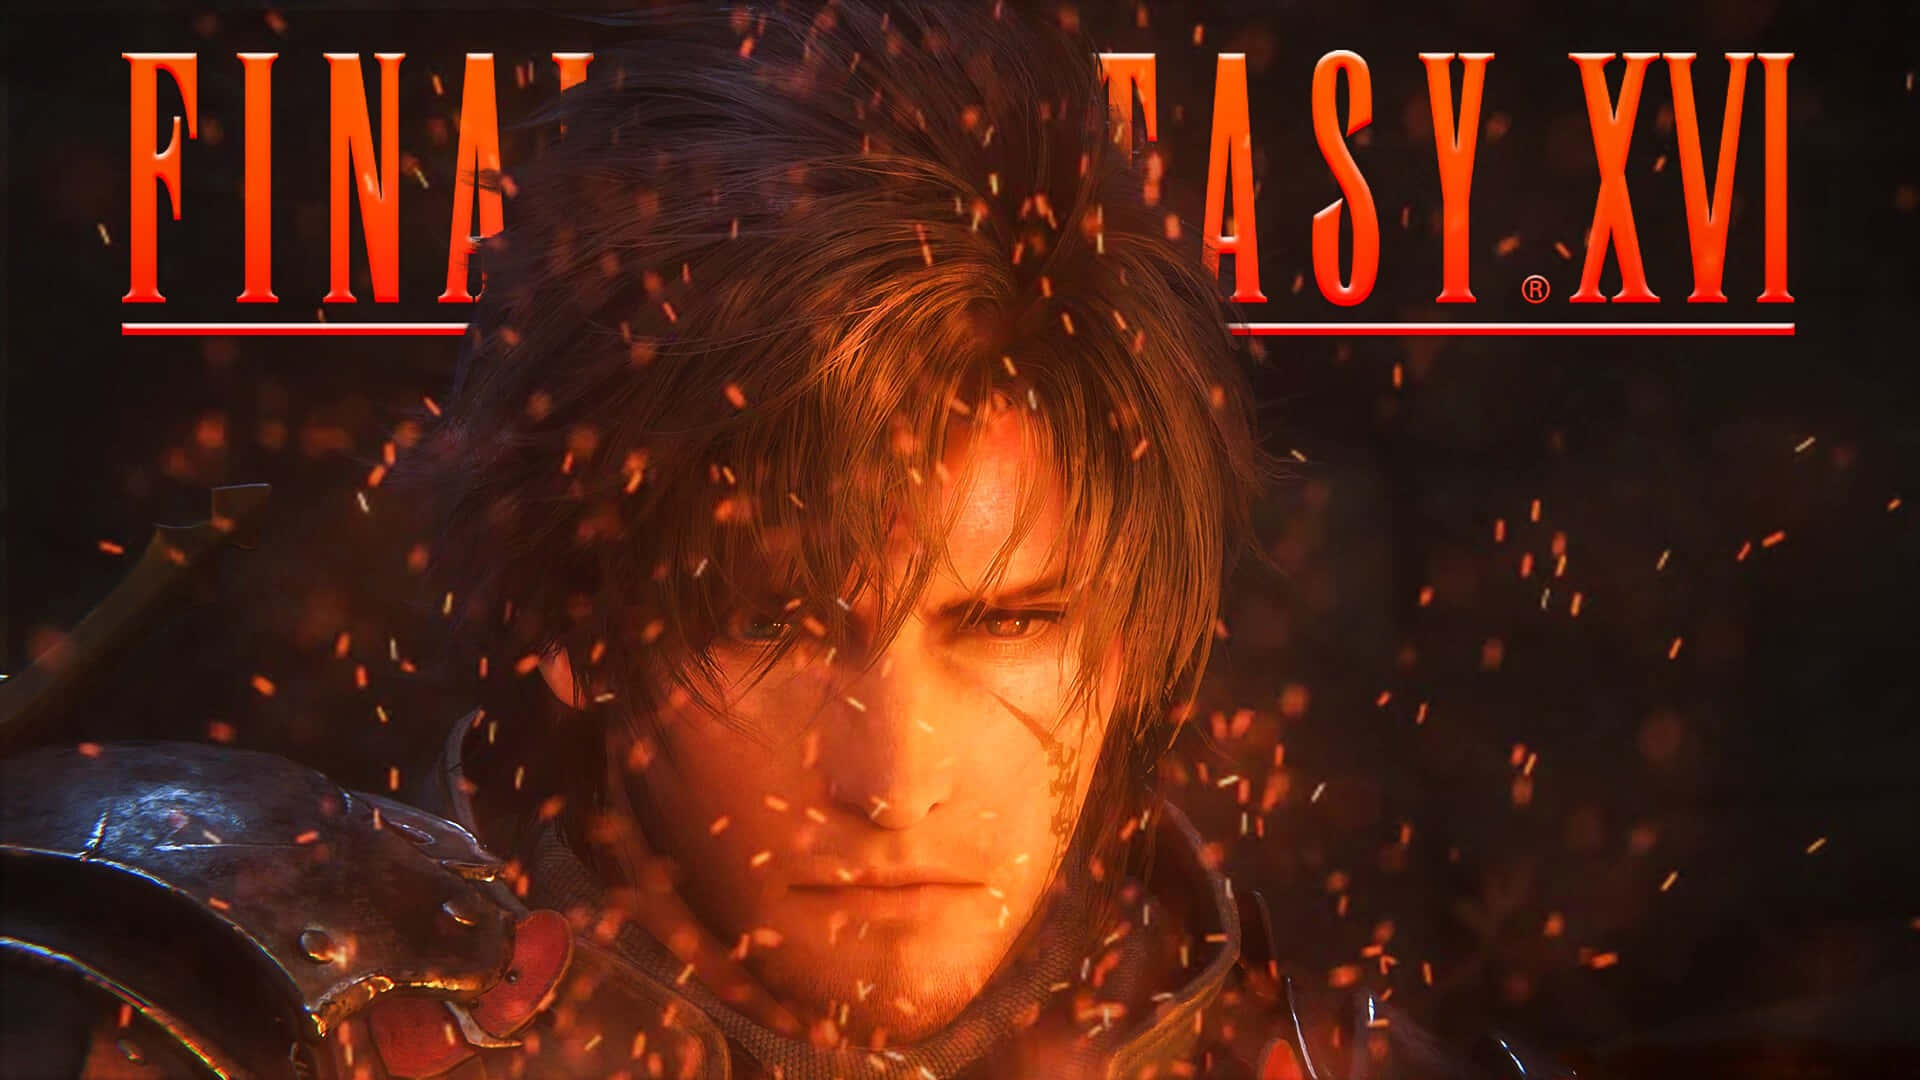 Final Fantasy X V I Intense Character Portrait Wallpaper